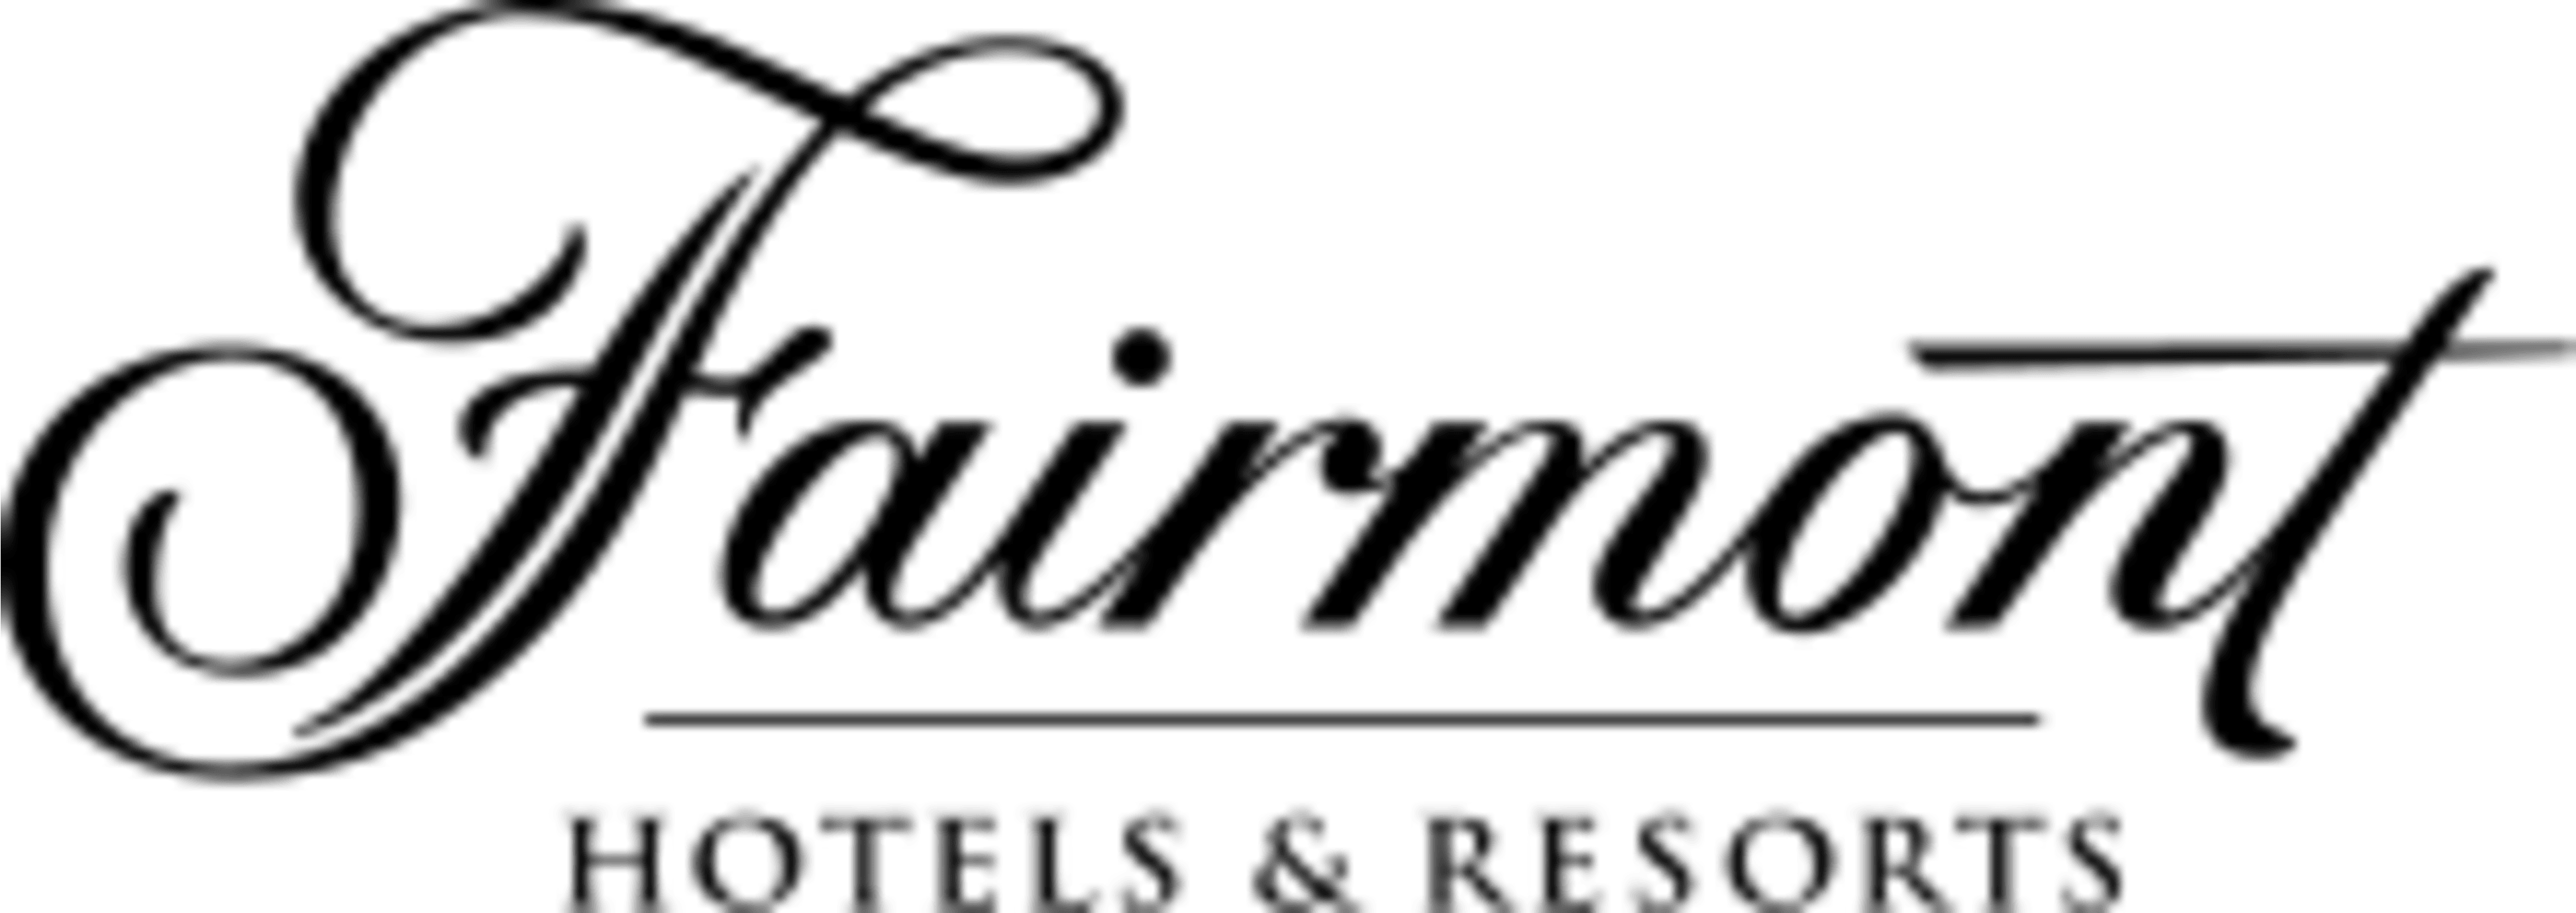 Fairmont HotelsCode